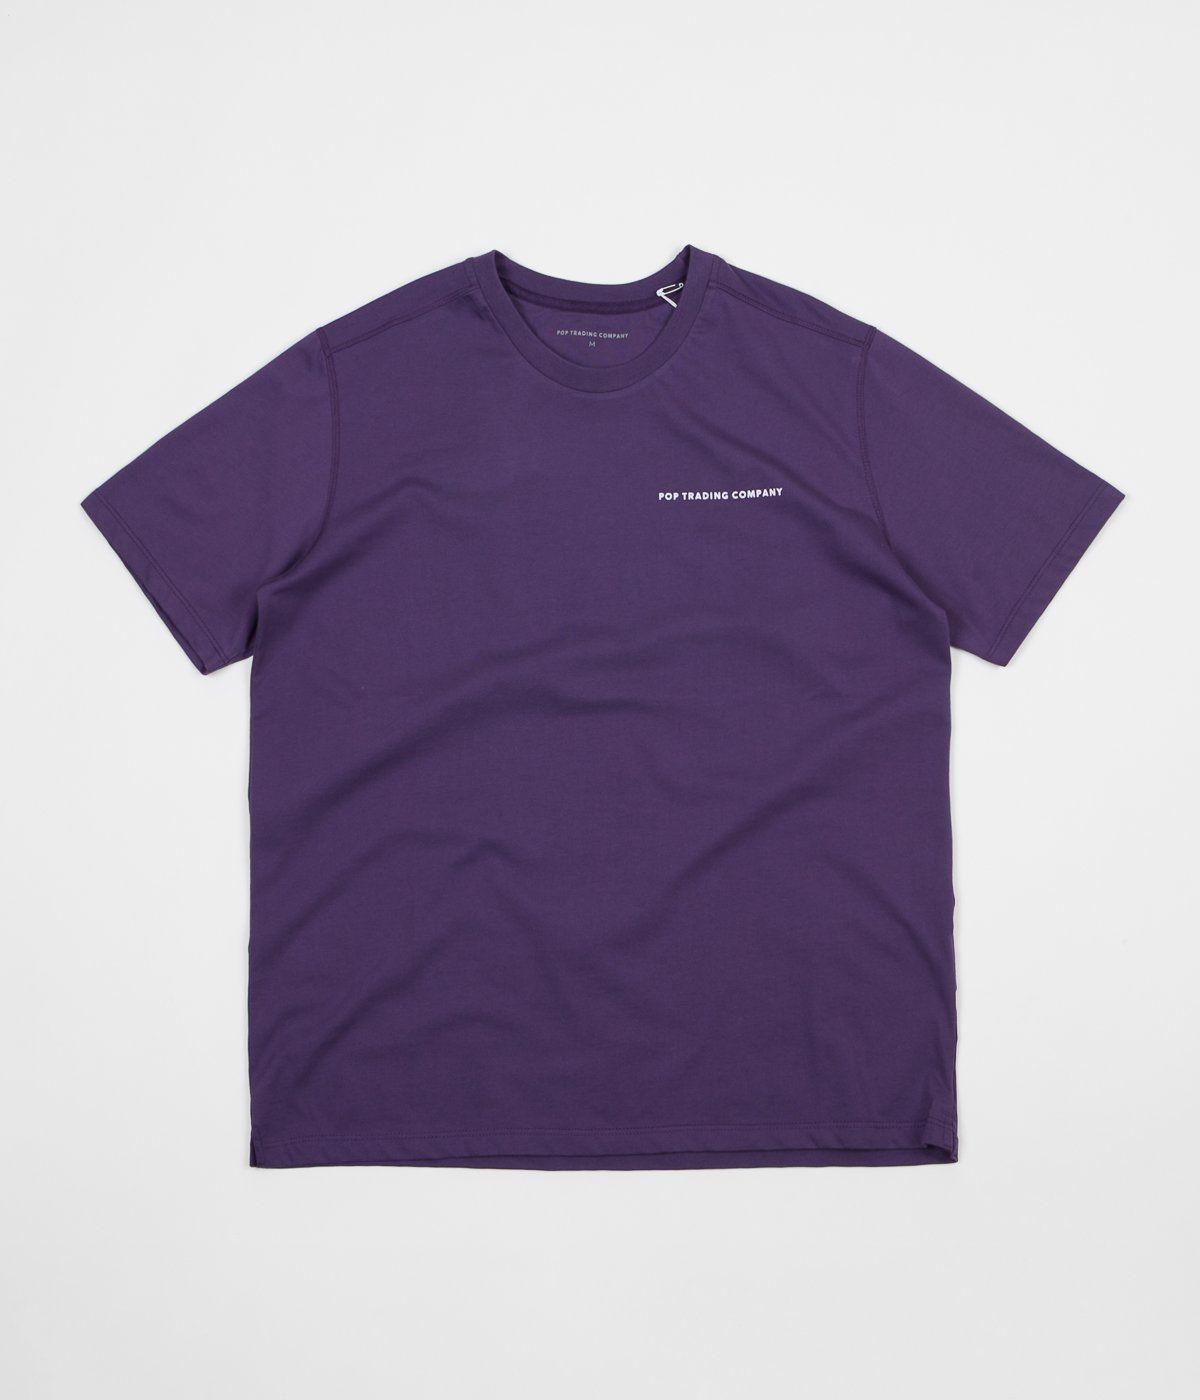 Eggplant and Grey Logo - Pop Trading Company Logo T Shirt